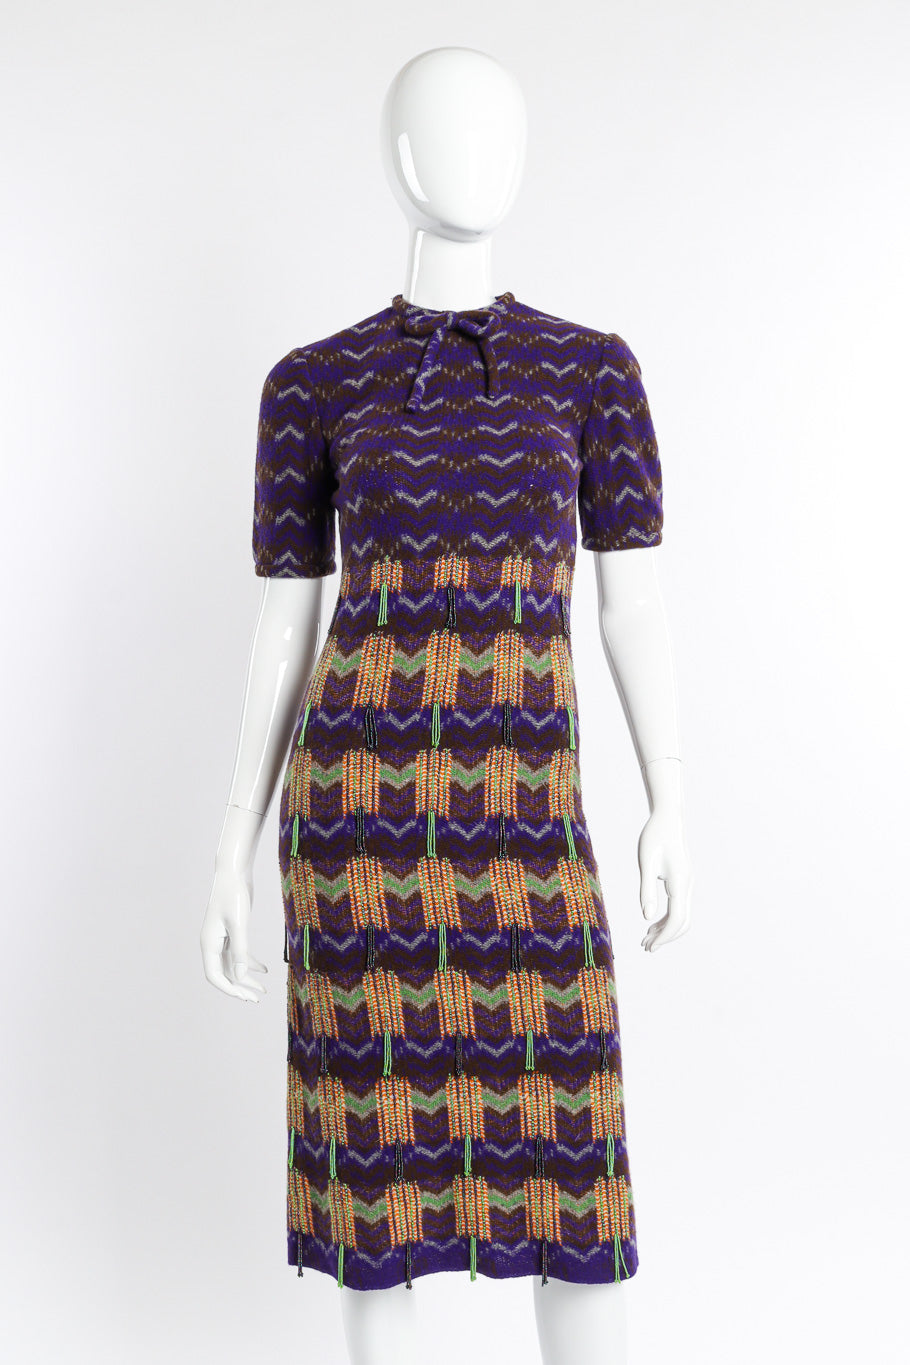 Vintage Richard Tam/Jon Mandl Chevron Knit Loop Dress front on mannequin @recessla